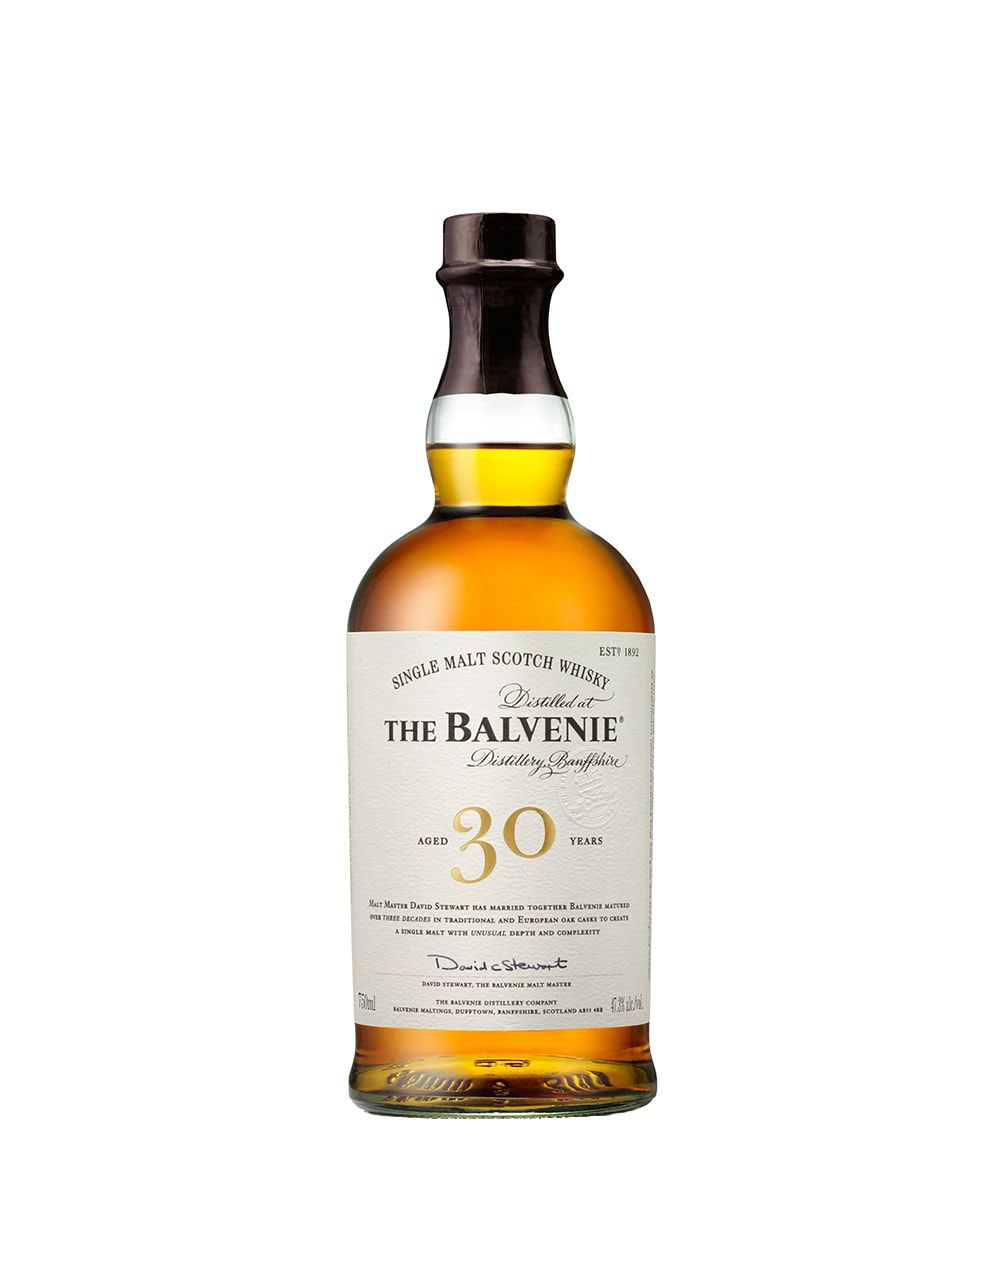 The Balvenie Aged 30 Years